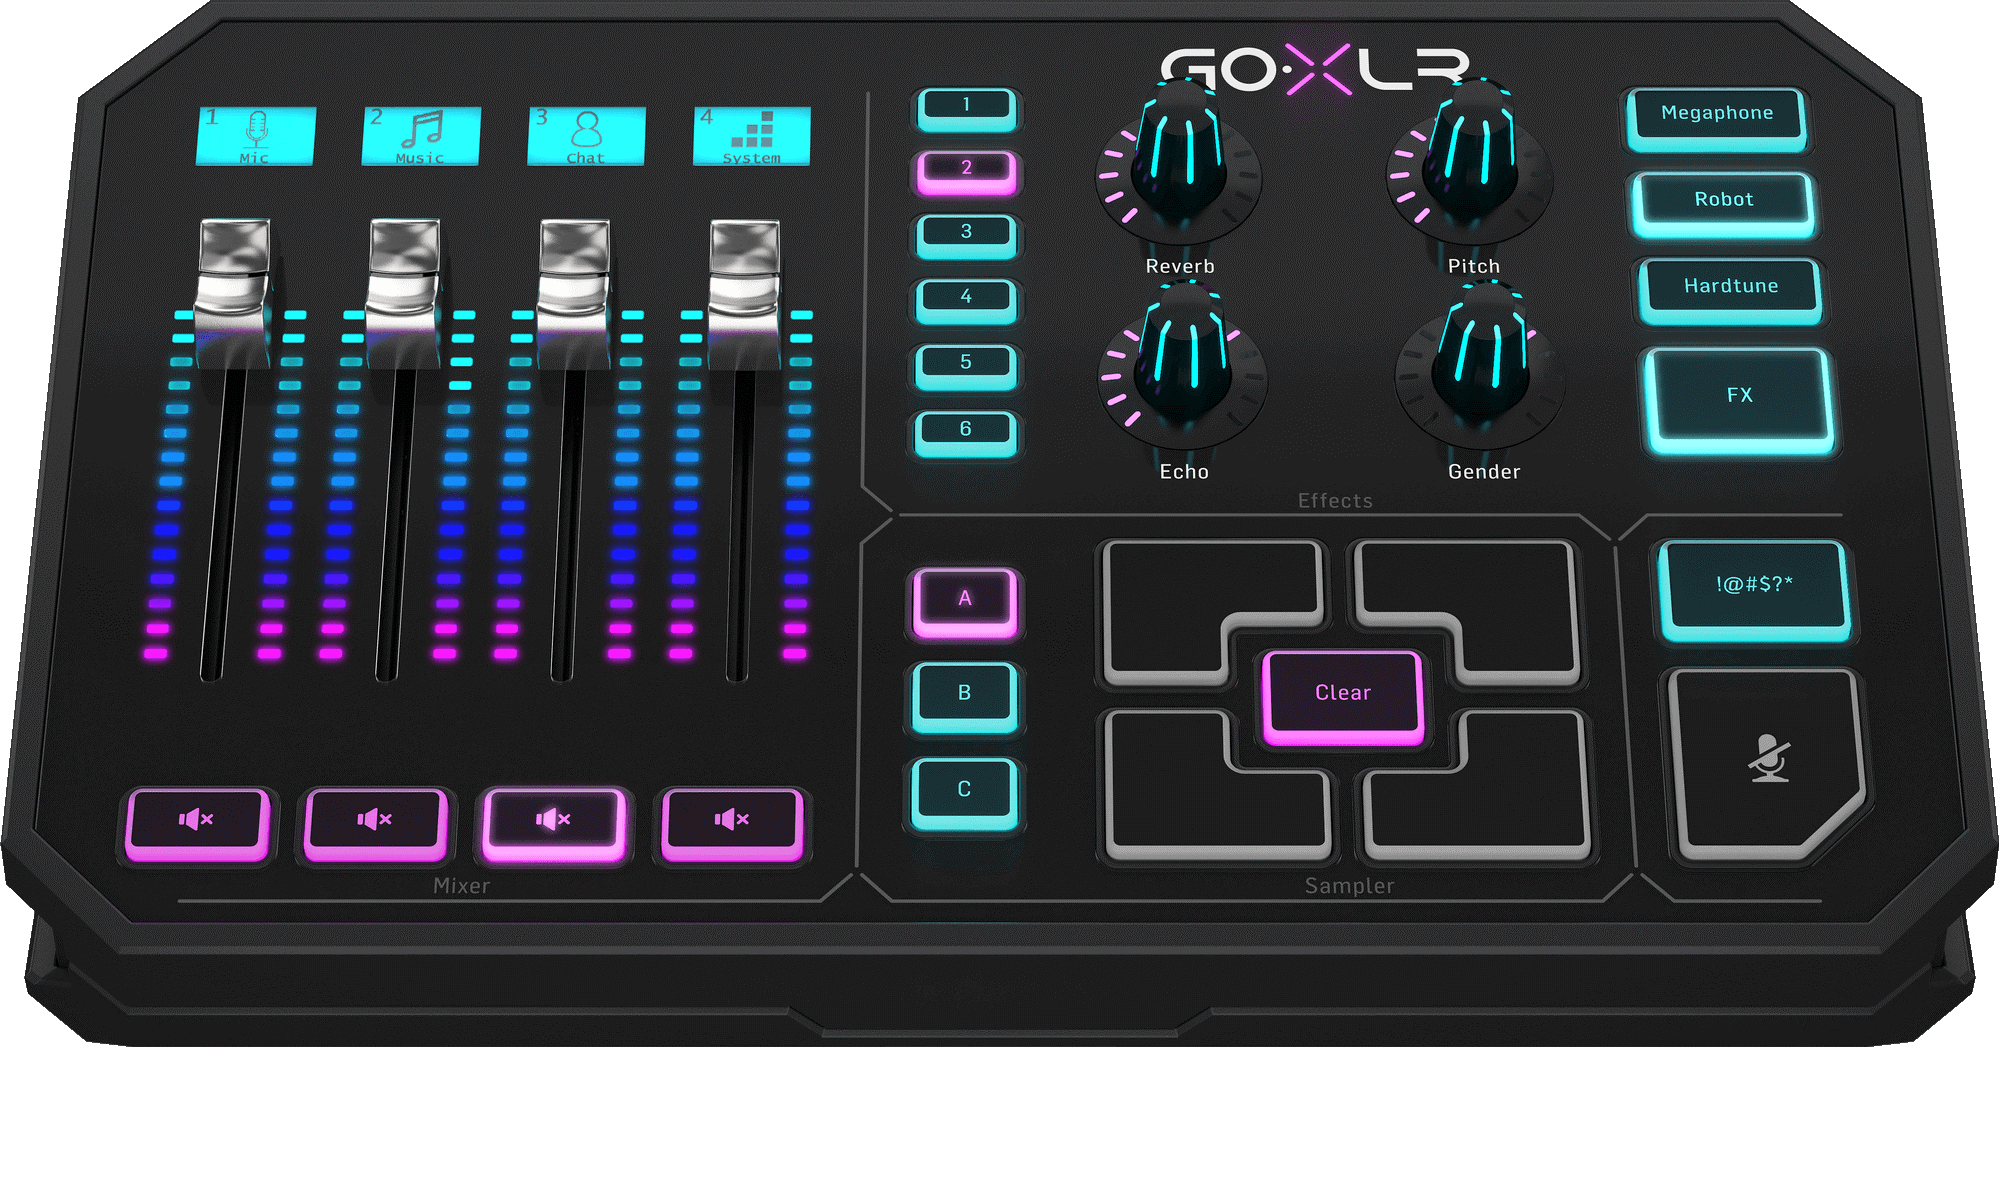 GoXLR Audio Mixer